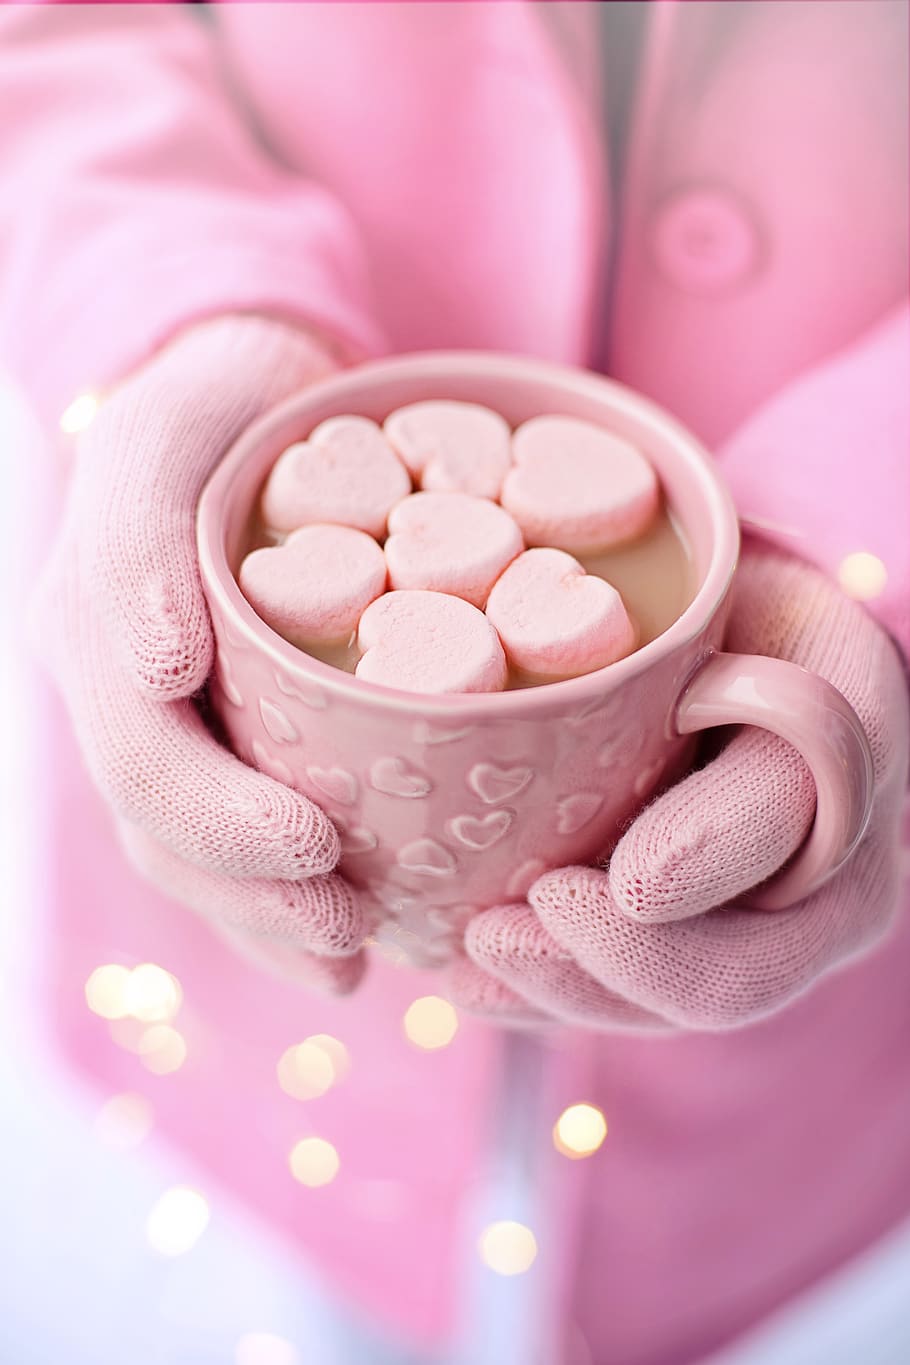 hari valentine, valentine, cokelat panas, pink, hati, marshmallow jantung, cinta, romantis, romansa, ulang tahun